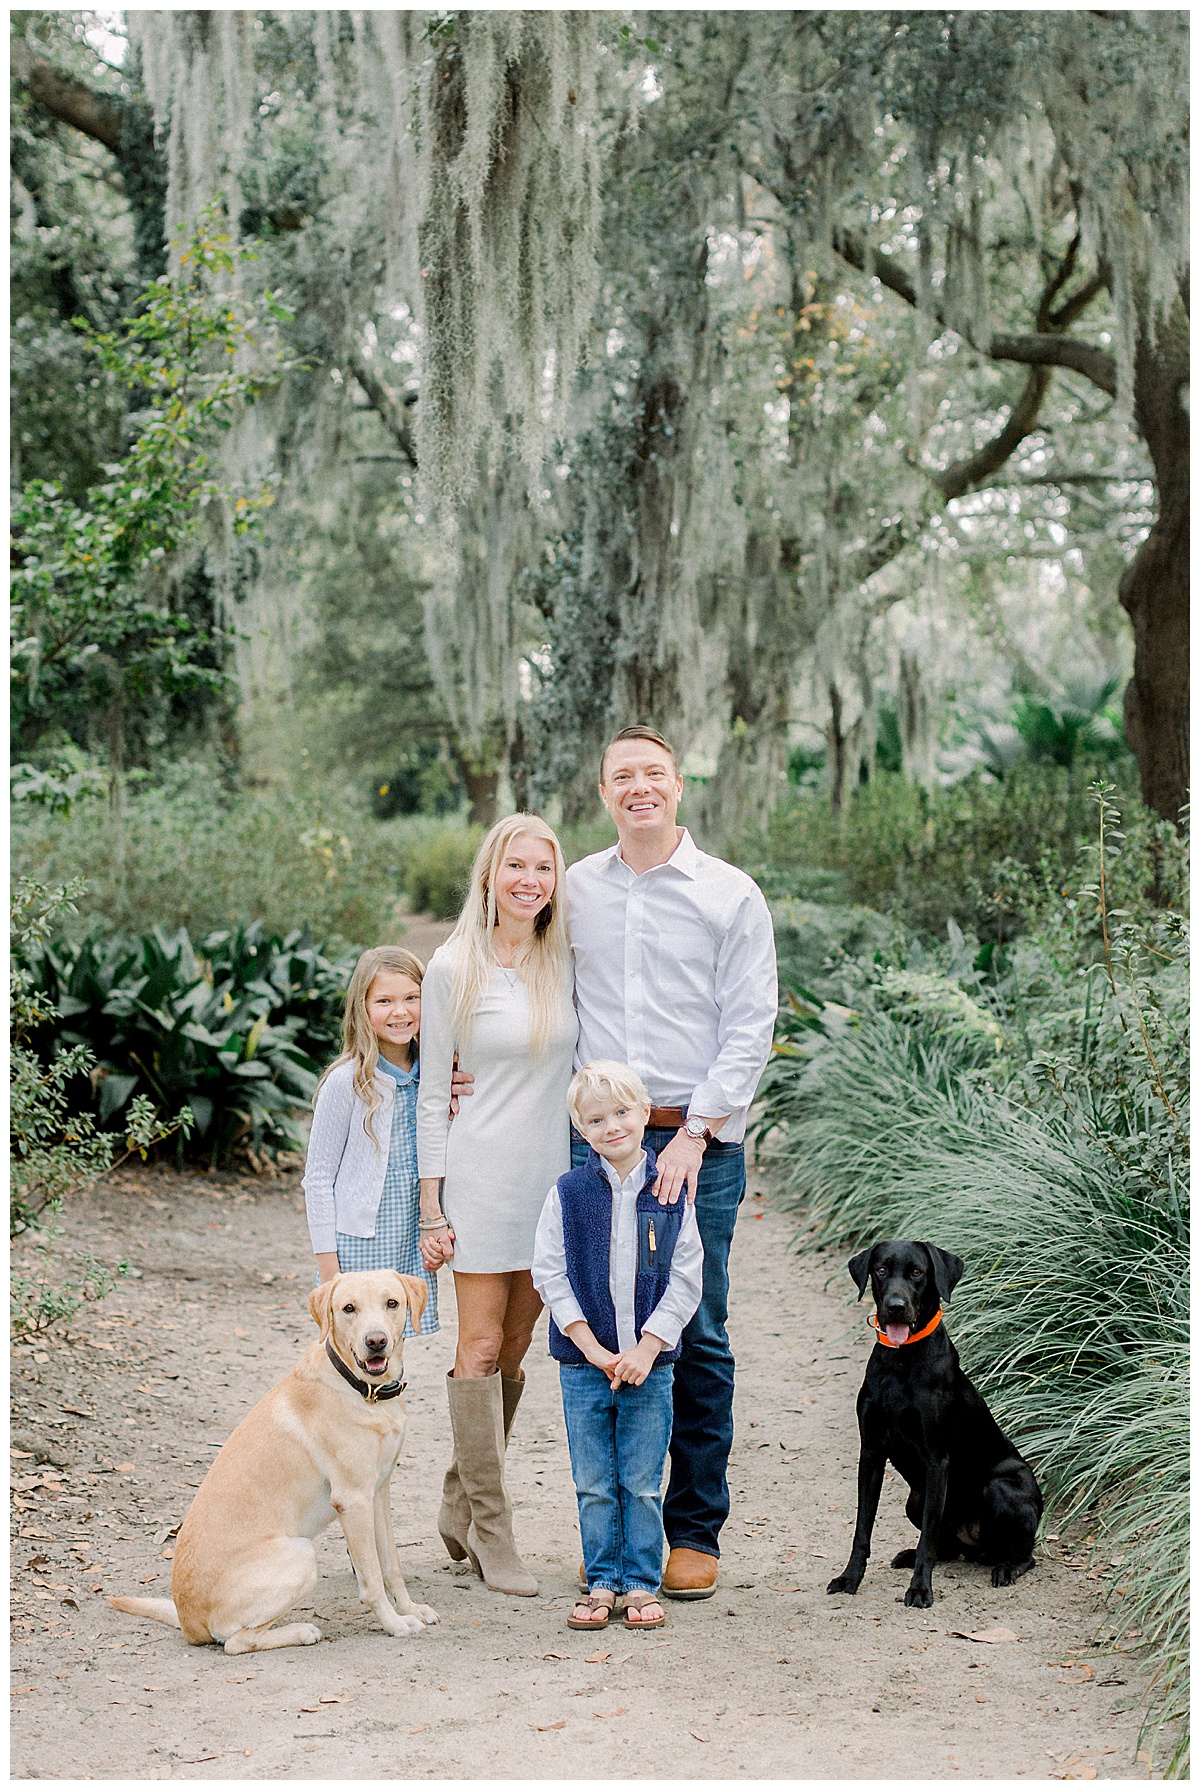 The Speir Family - Family Portraits in Charleston Gardens | Charleston Family Photographer | Candice Adelle Photography_0142.jpg